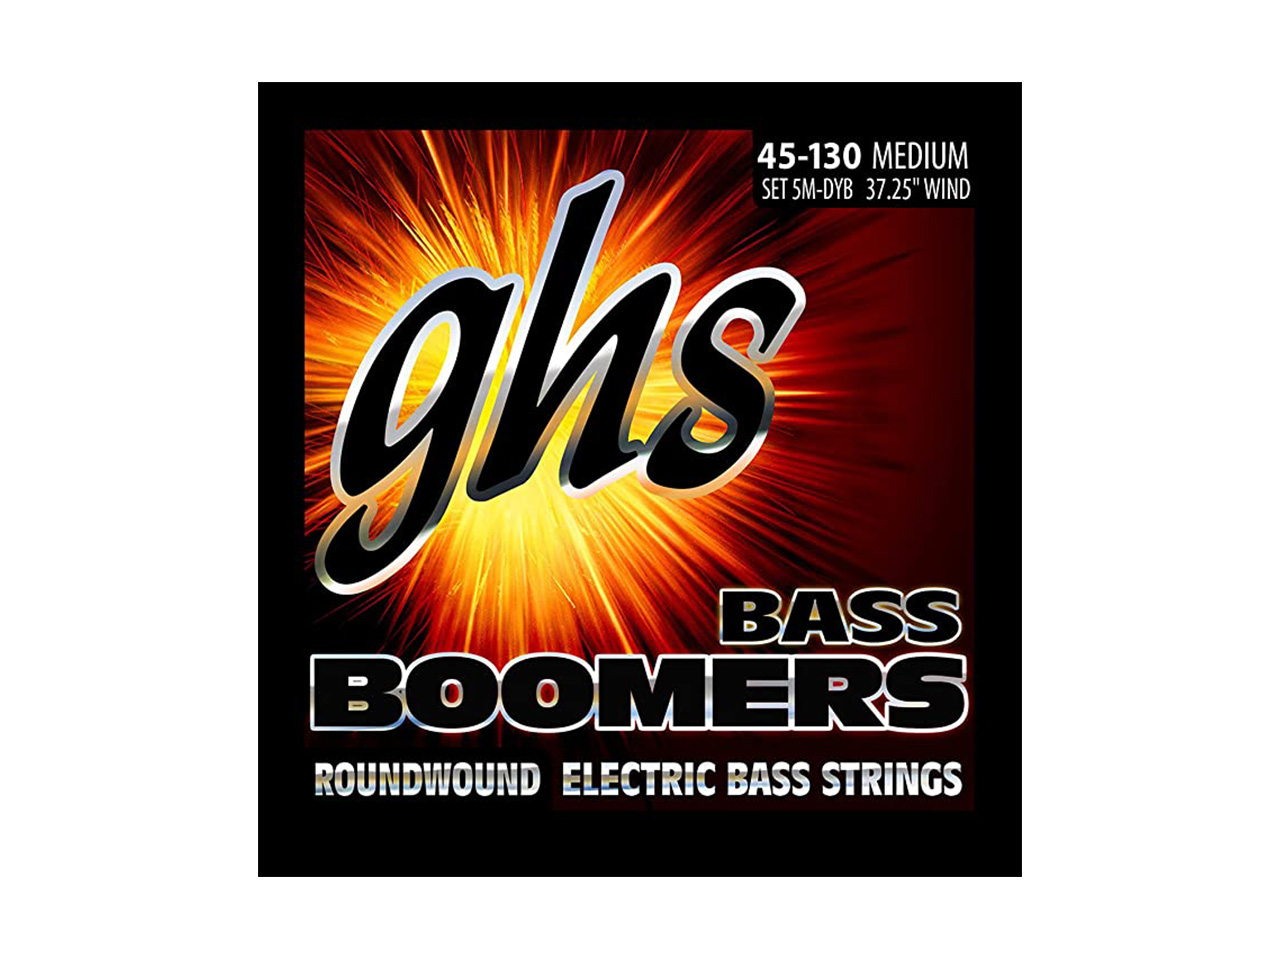 ghs(ジーエイチエス) Bass Boomers® Medium 5M-DYB / 45-130 (エレキベース弦/Long Scale/5弦用 )